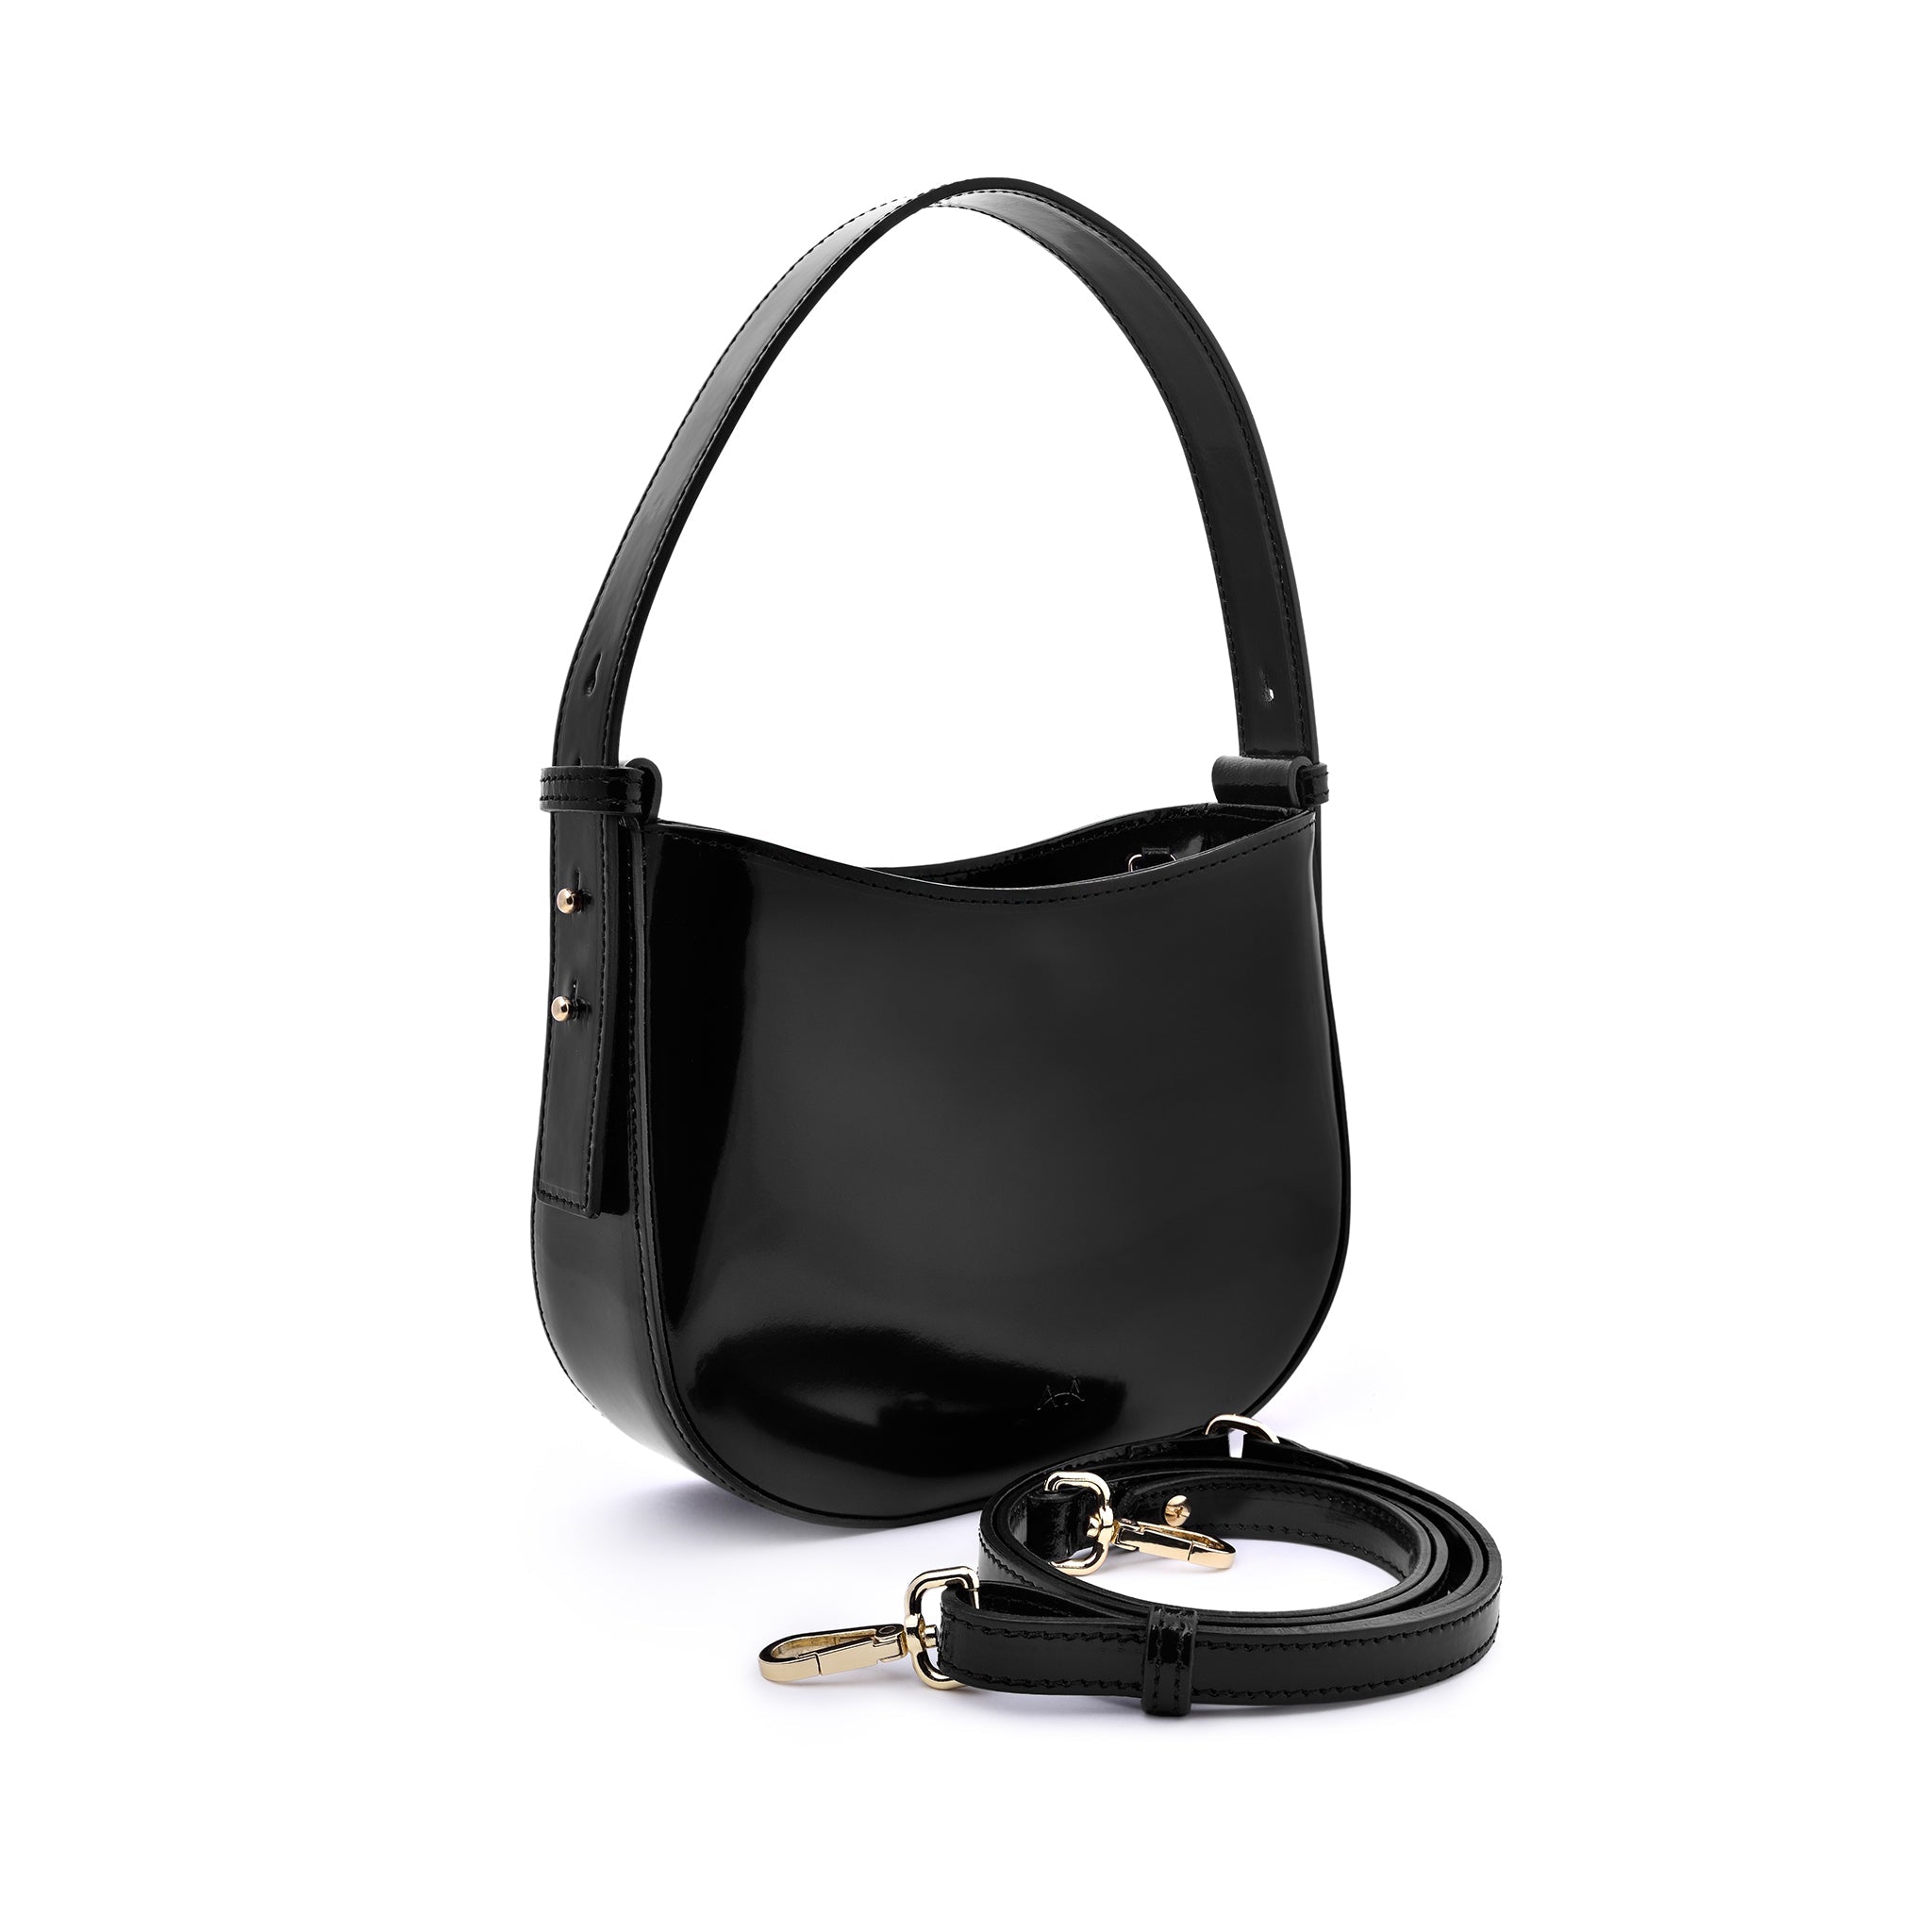 Mio Black Semi Patent Leather Shoulder Bag CL10678 NERO - 7